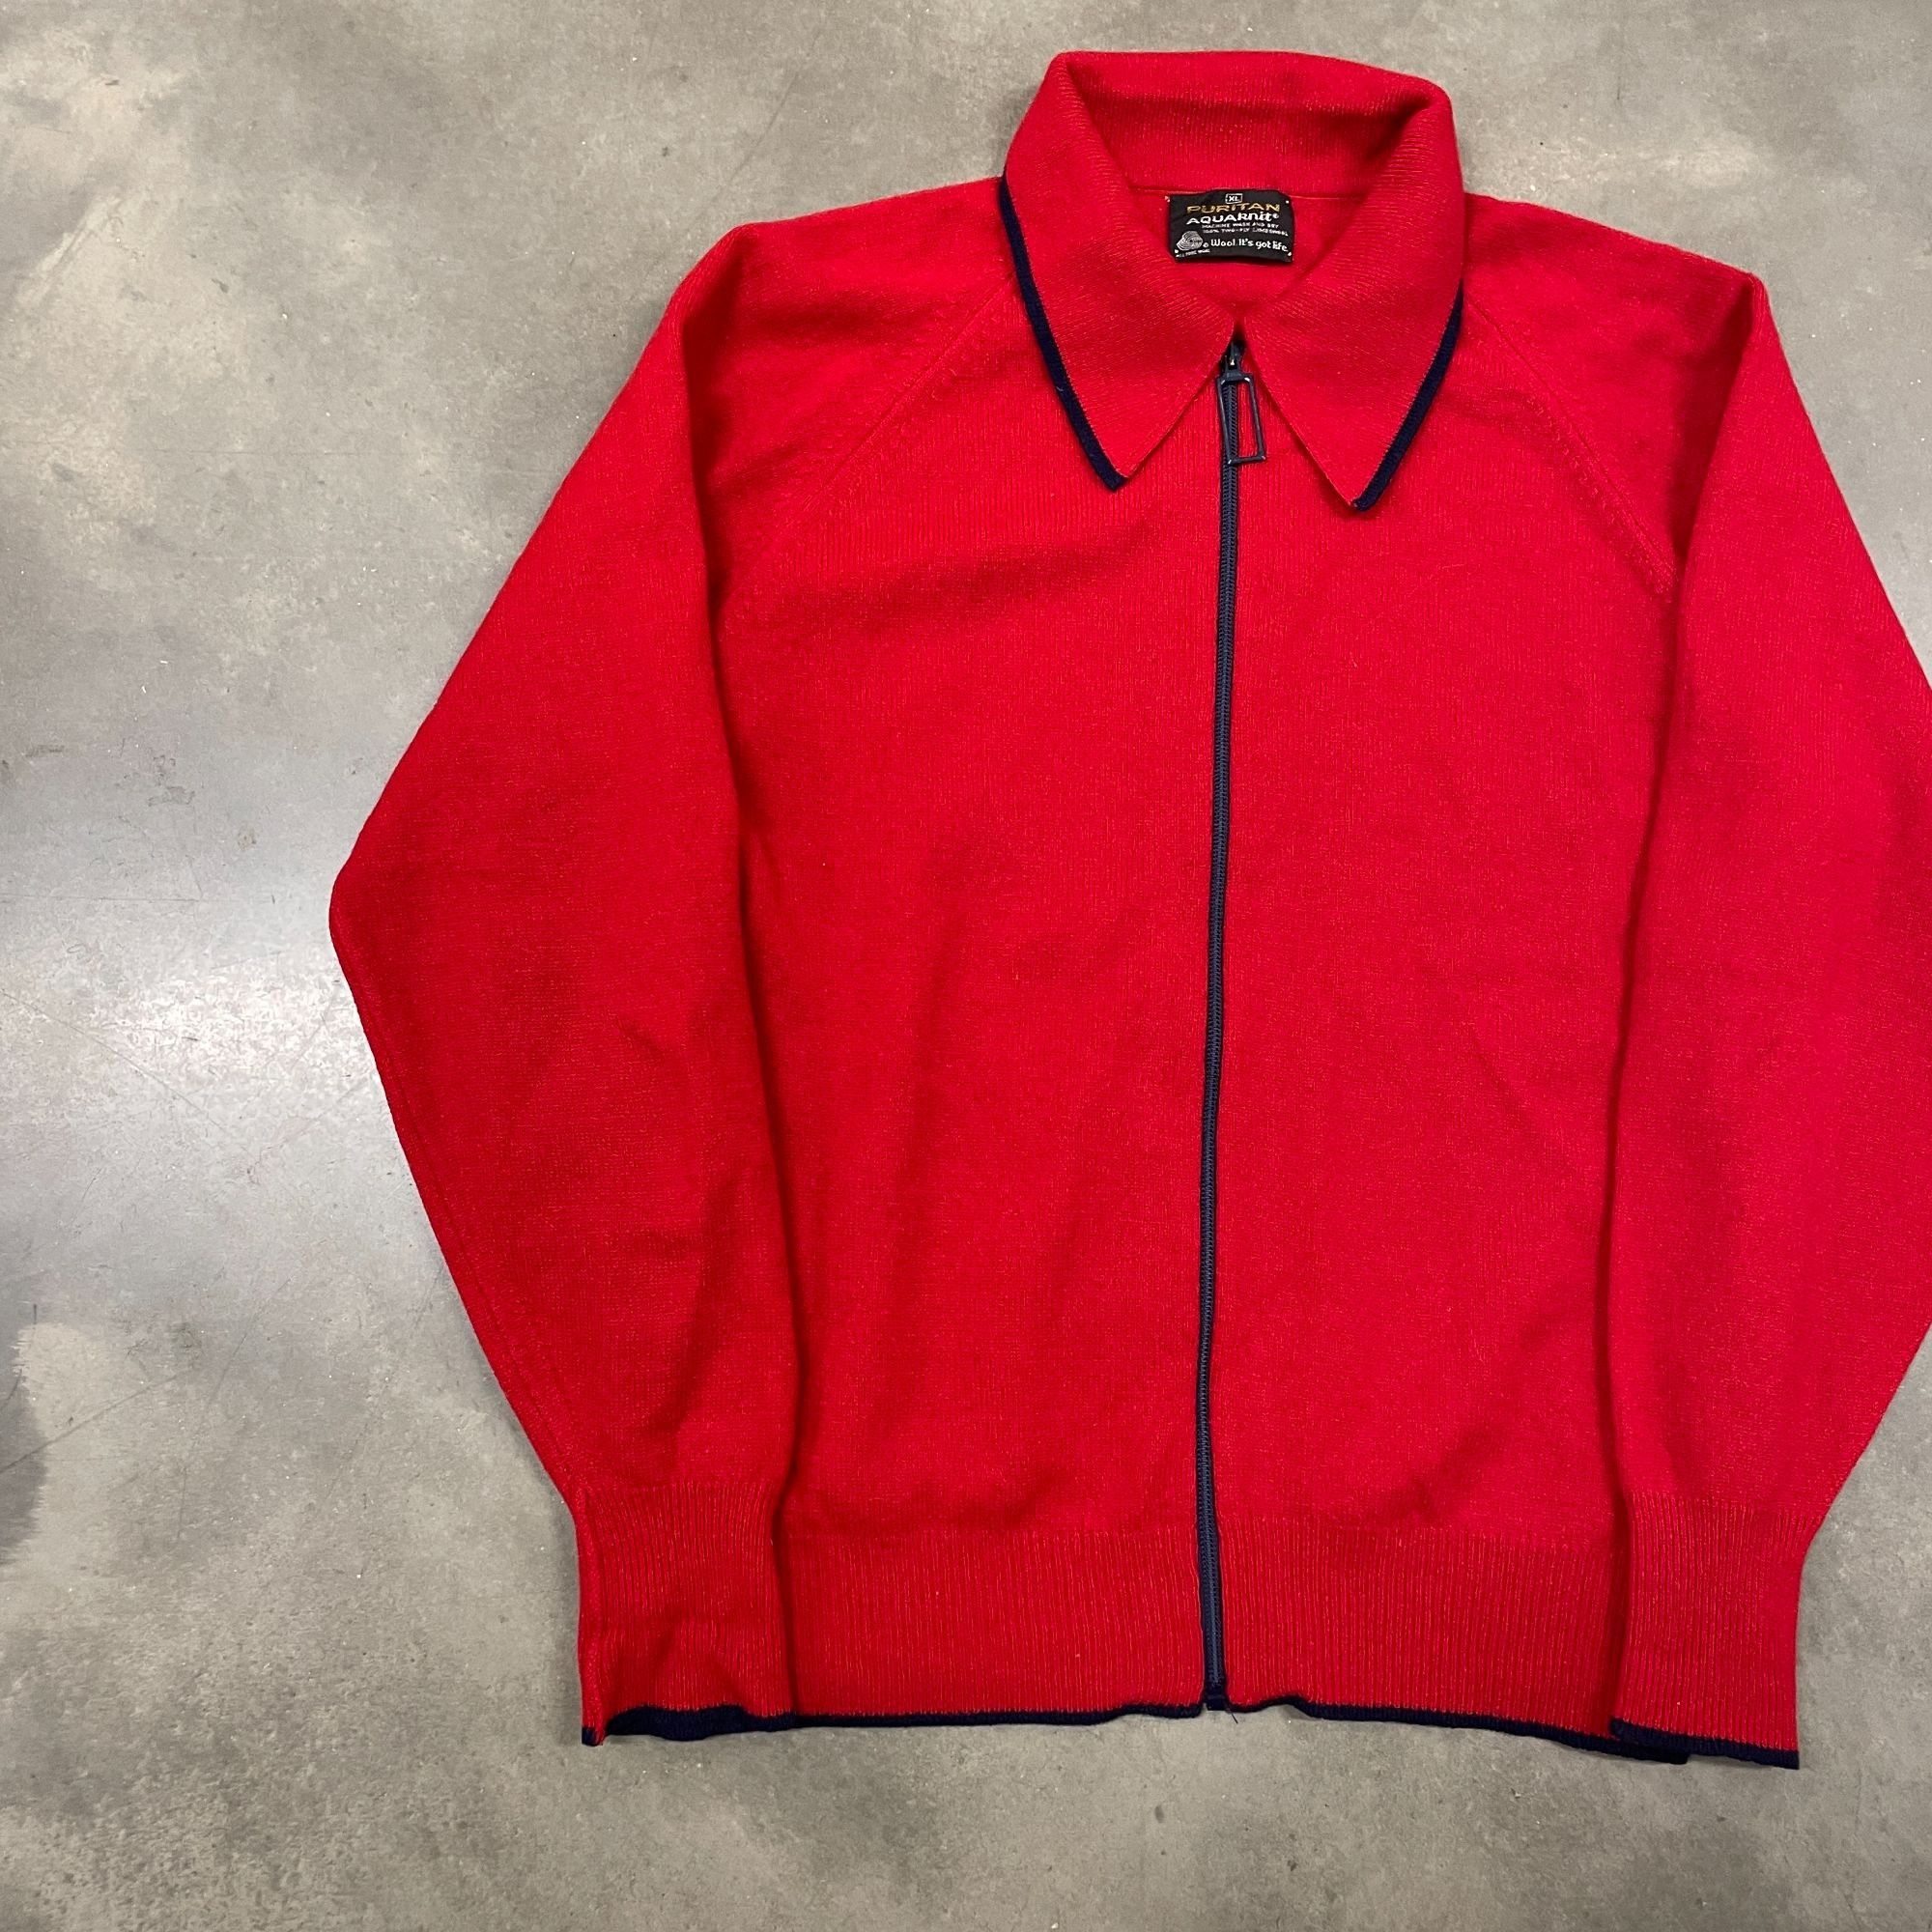 Vintage 60s VTG Red Wool Puritan Aquaknit Wool Zip Up Sweater XL Red Size US XL / EU 56 / 4 - 4 Thumbnail